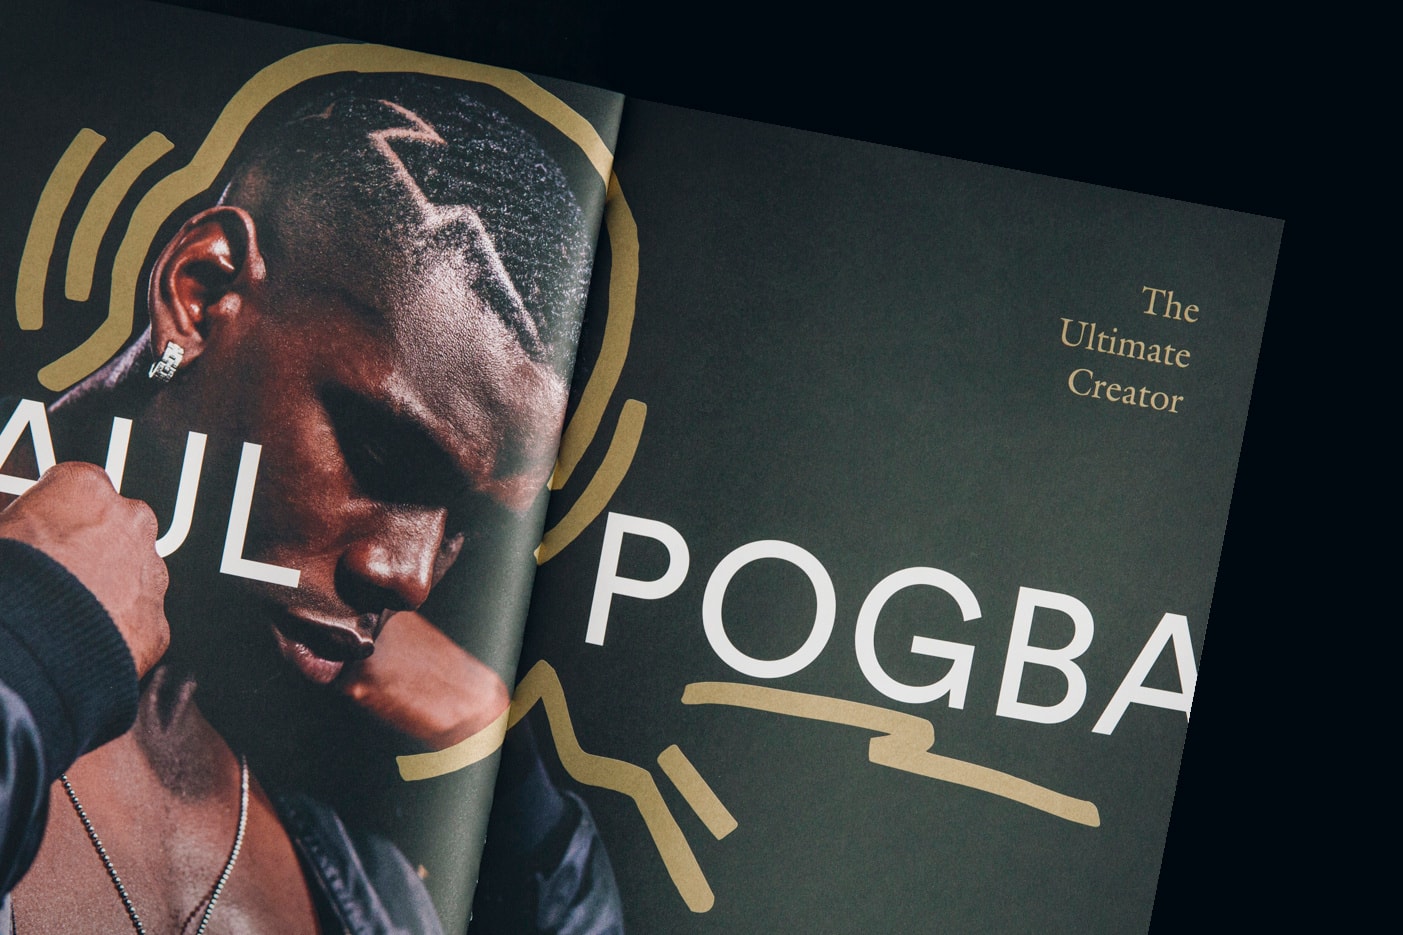 hypebeast magazine paul pogba 2017